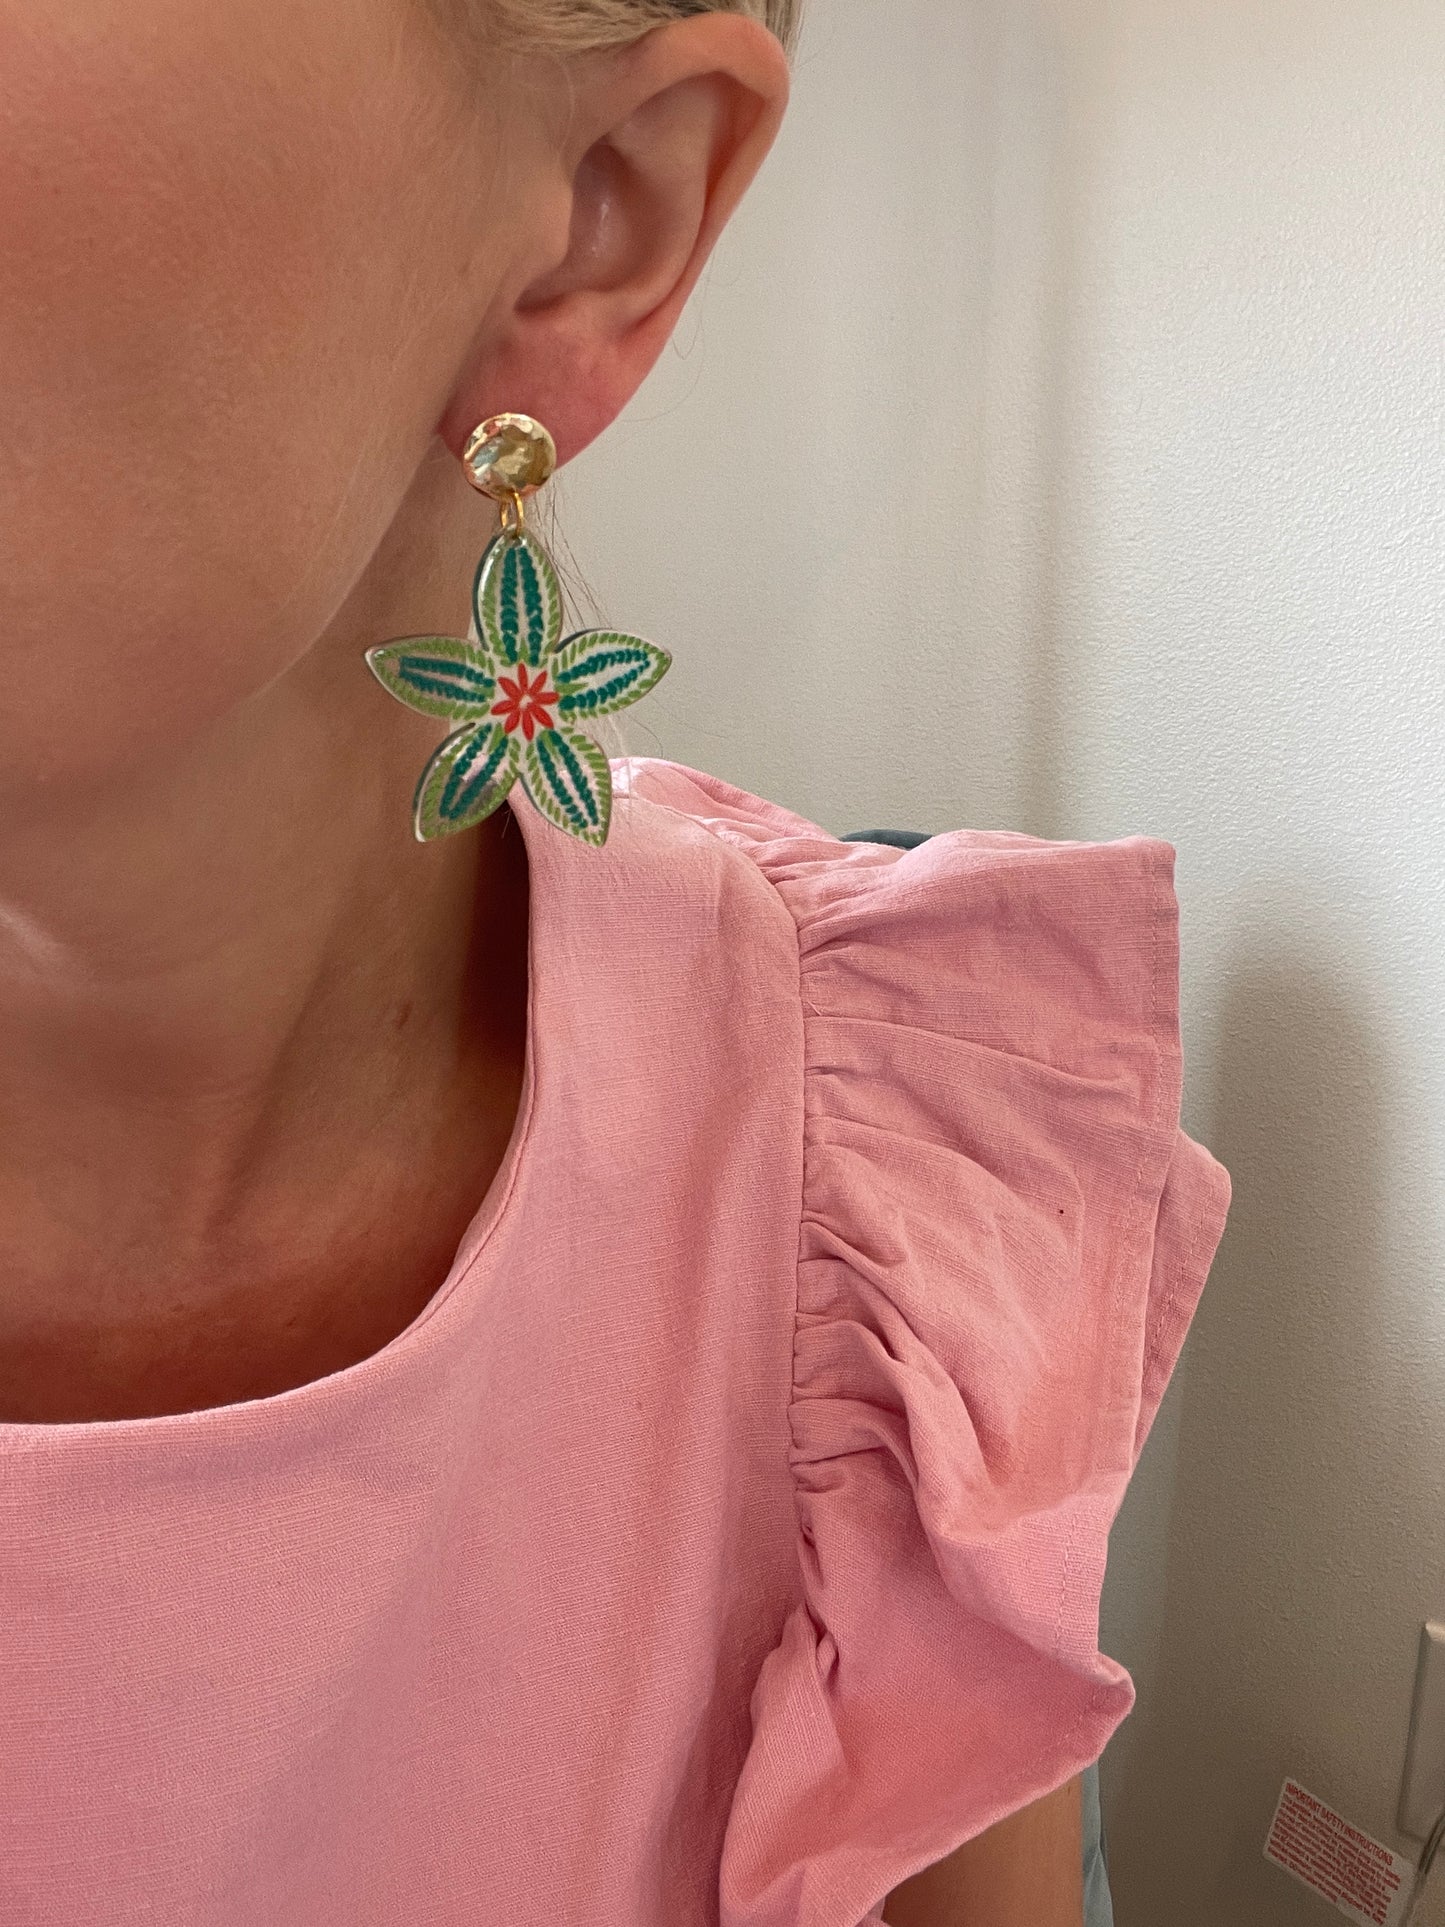 Acrylic Floral Earrings - Green